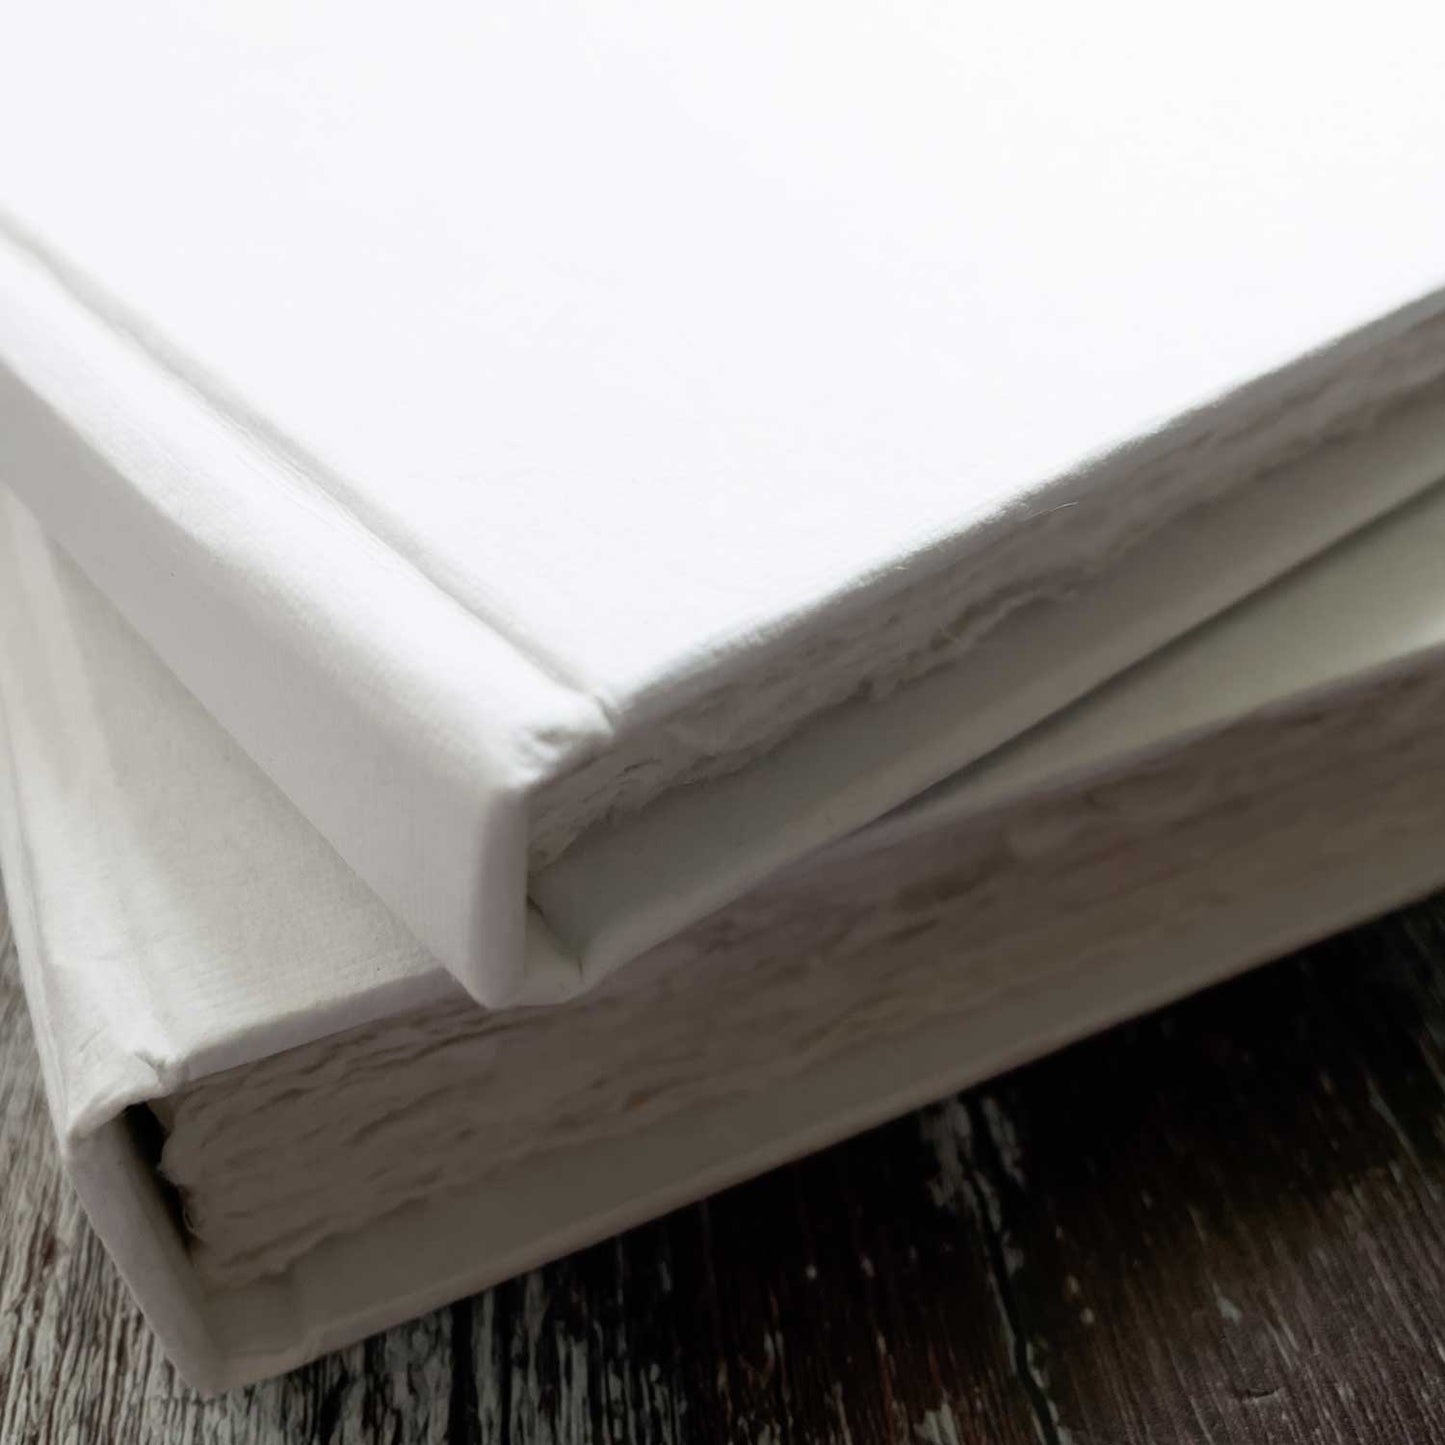 White Handmade Guest Book (cotton rag paper) - 100 Page  ImagineDIY   